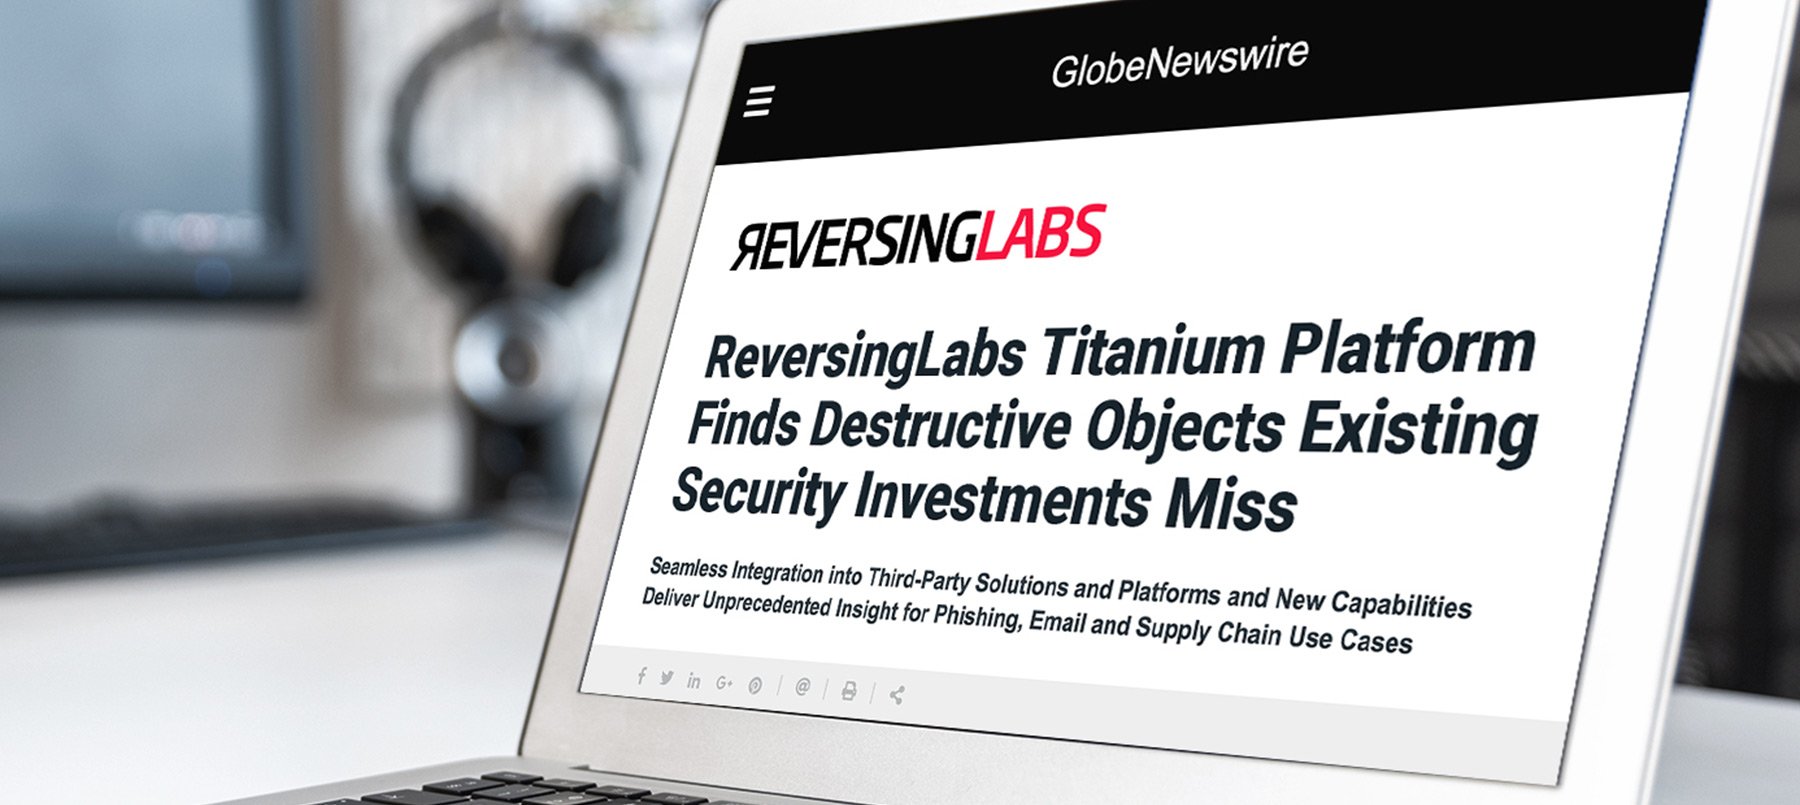 ReversingLabs Titanium Platform Finds Destructive Objects Existing Security Investments Miss